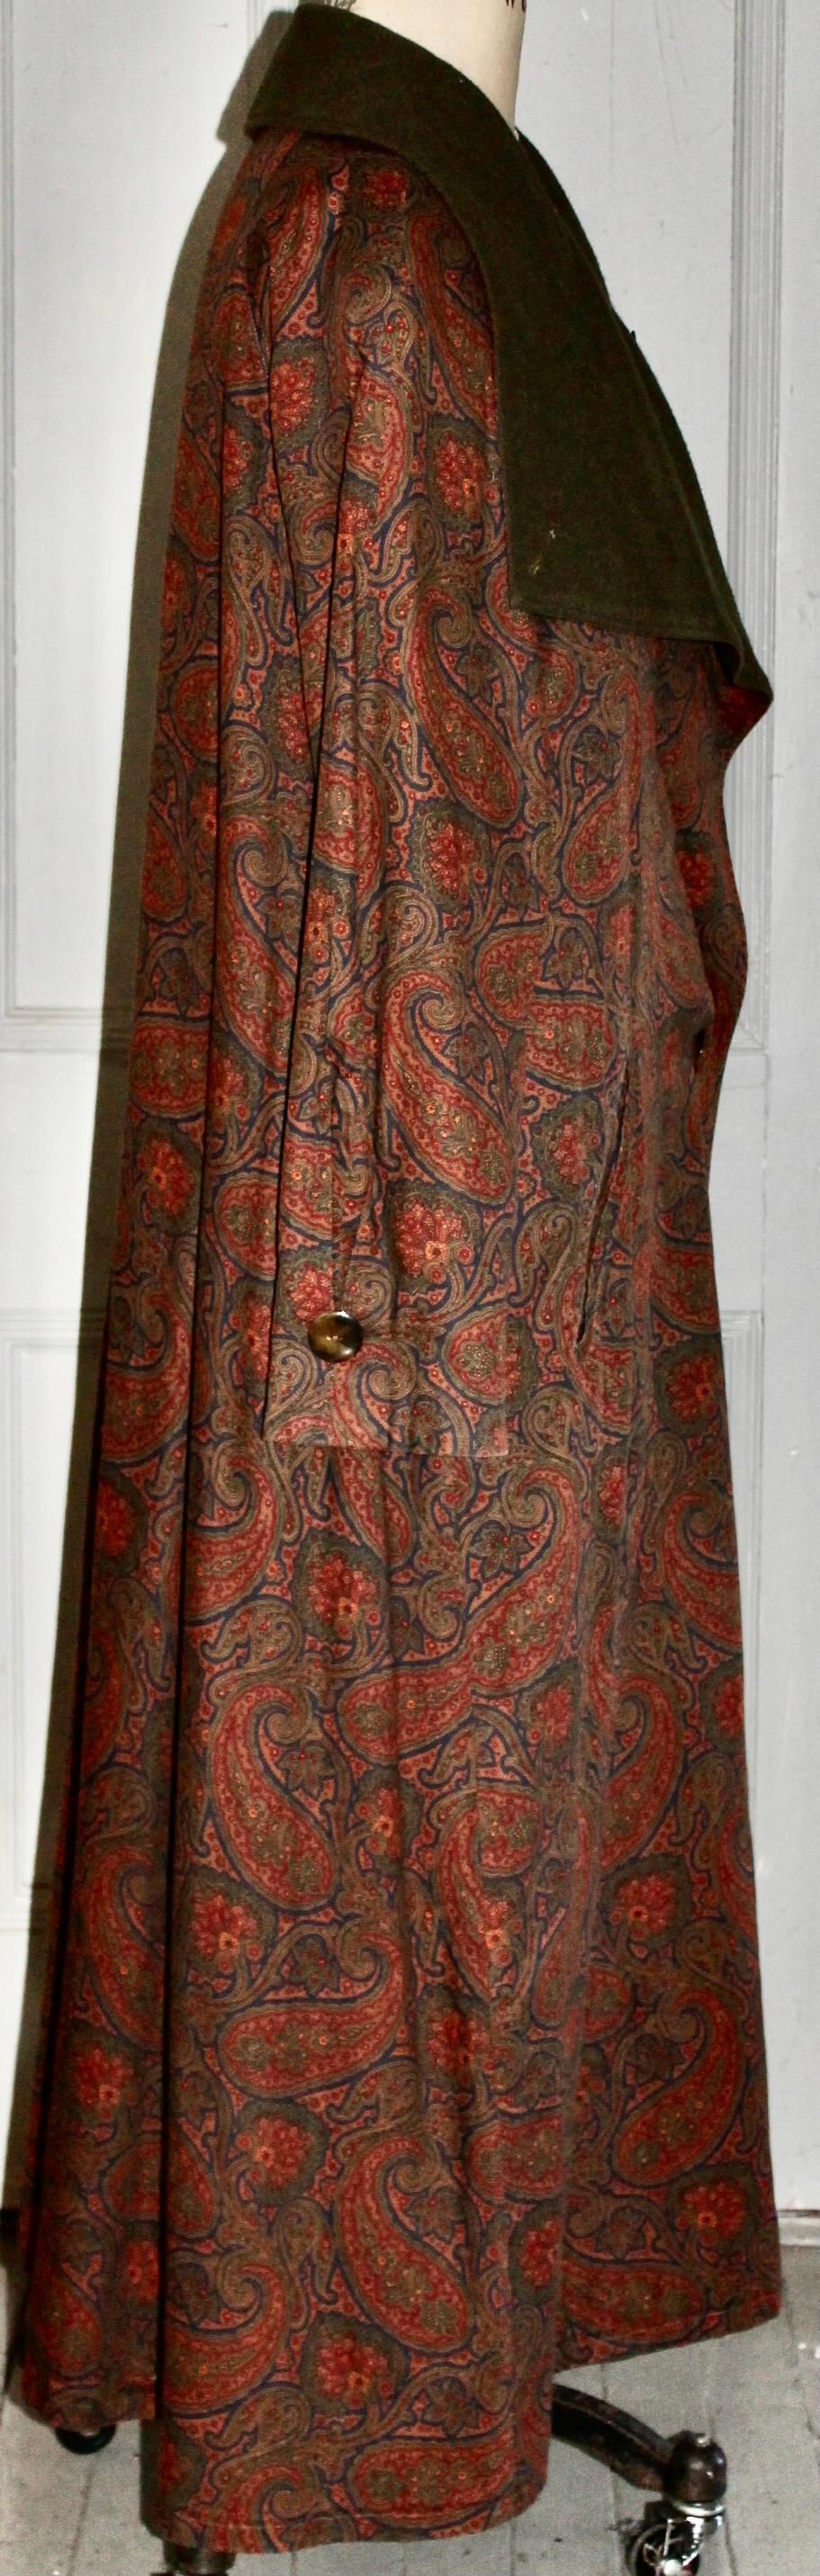 Women's Bill Blass Paisley Edwardian Style Dress Coat